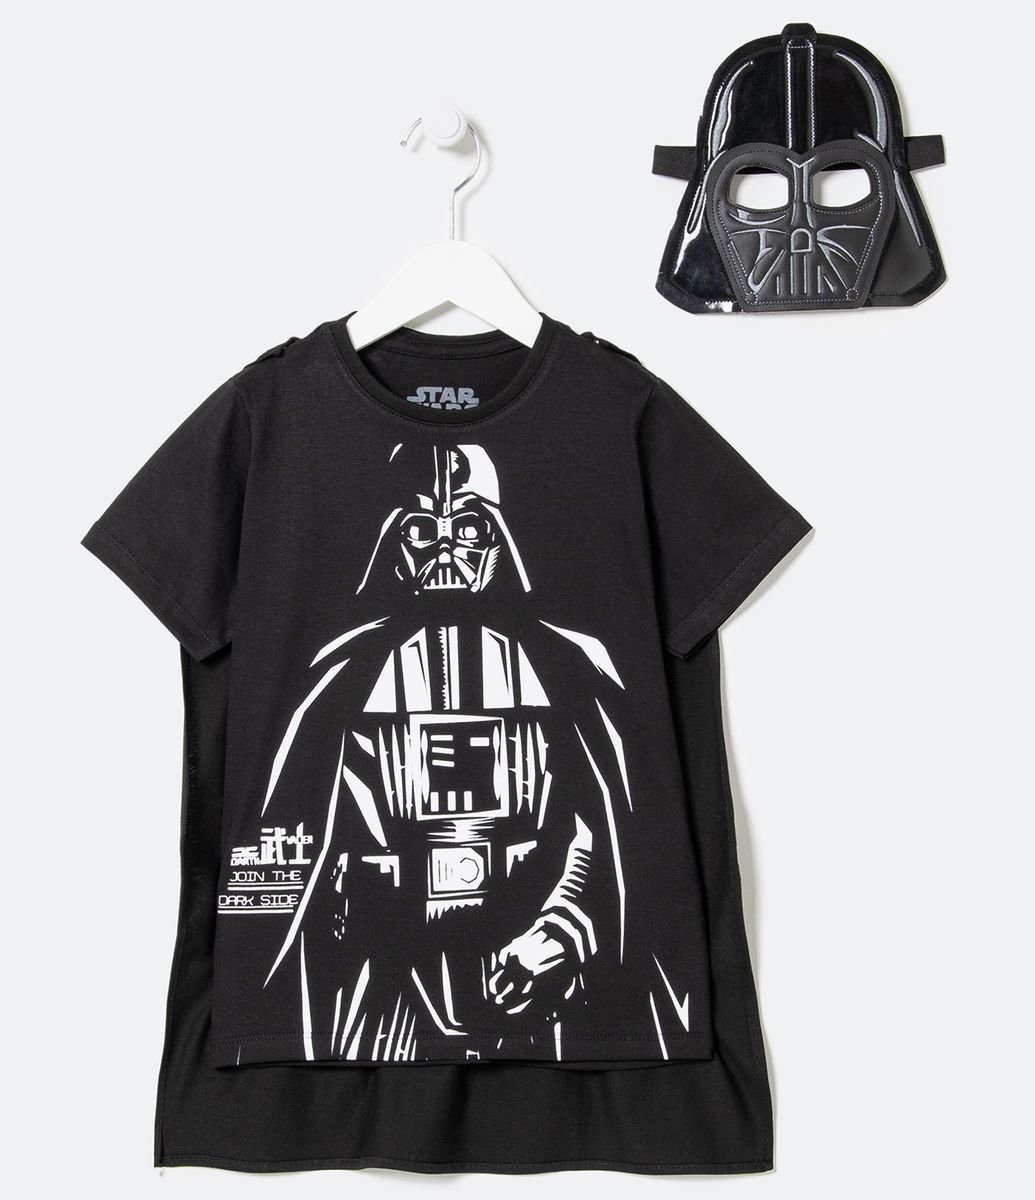 Camiseta Darth Vader, da Renner